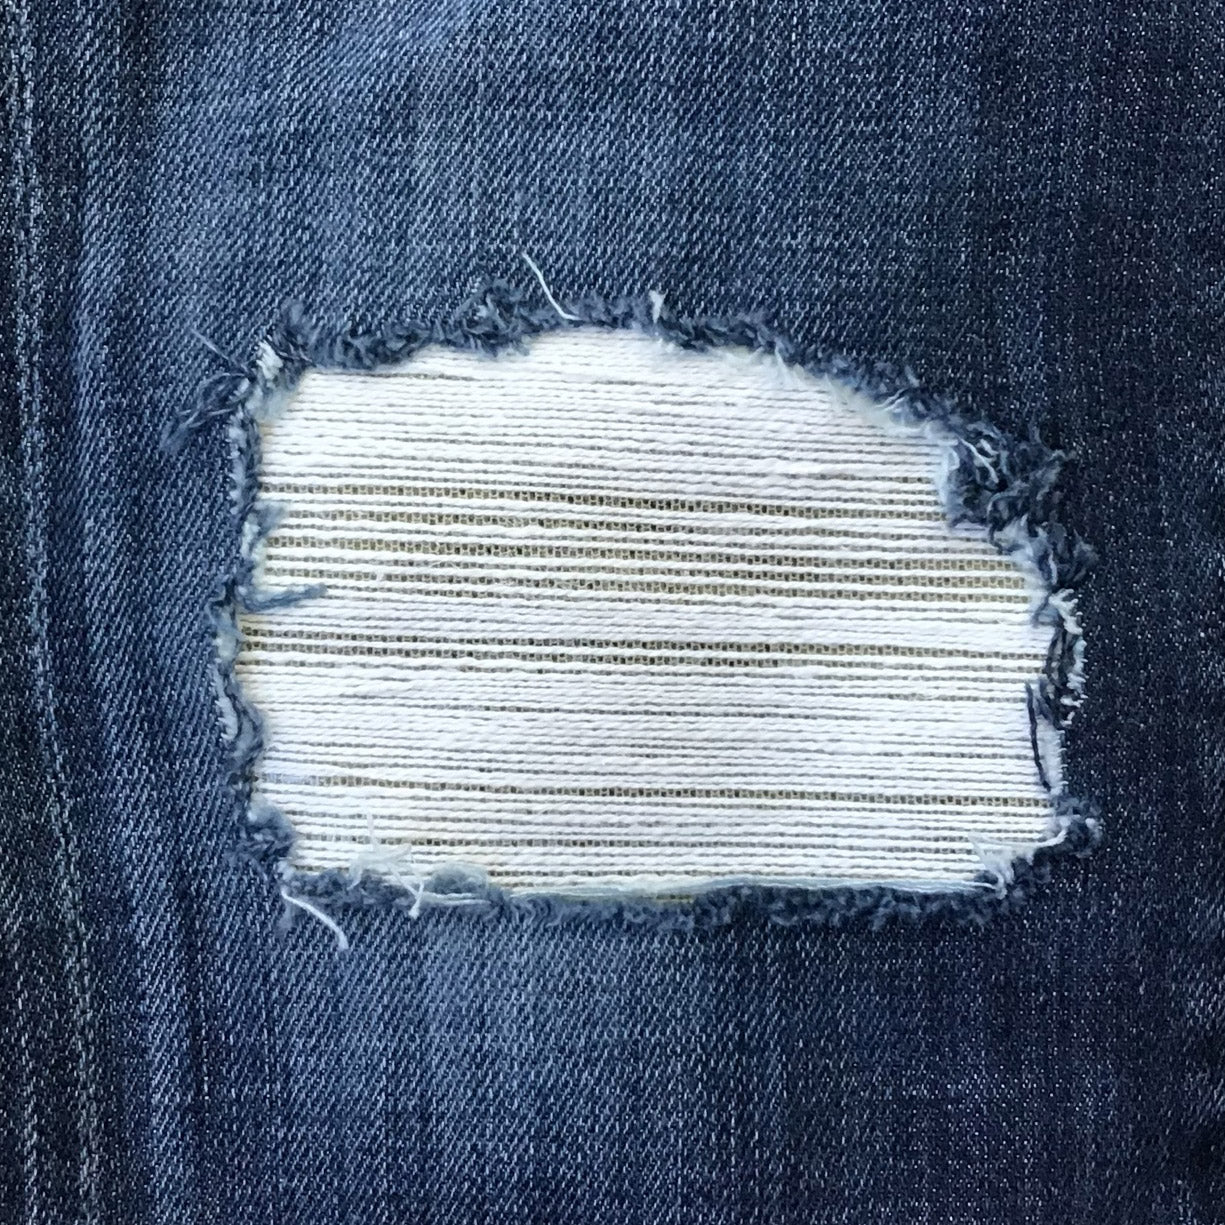 Medium Blue Denim Jean Patches - Iron on Denim Jean Patches - Iron Patches